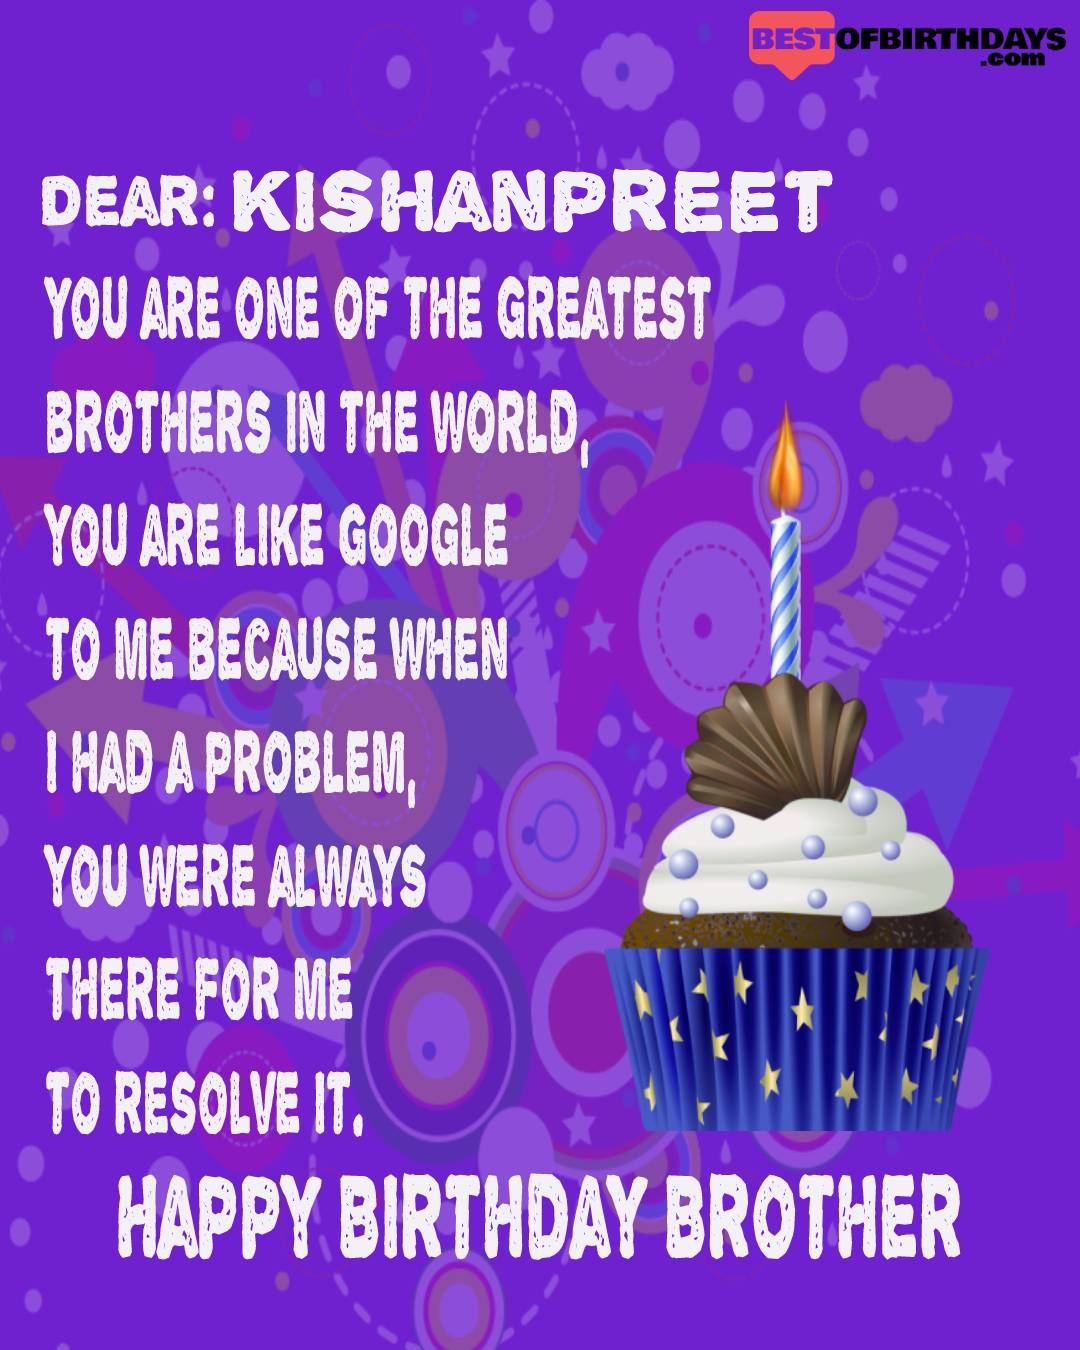 Happy birthday kishanpreet bhai brother bro